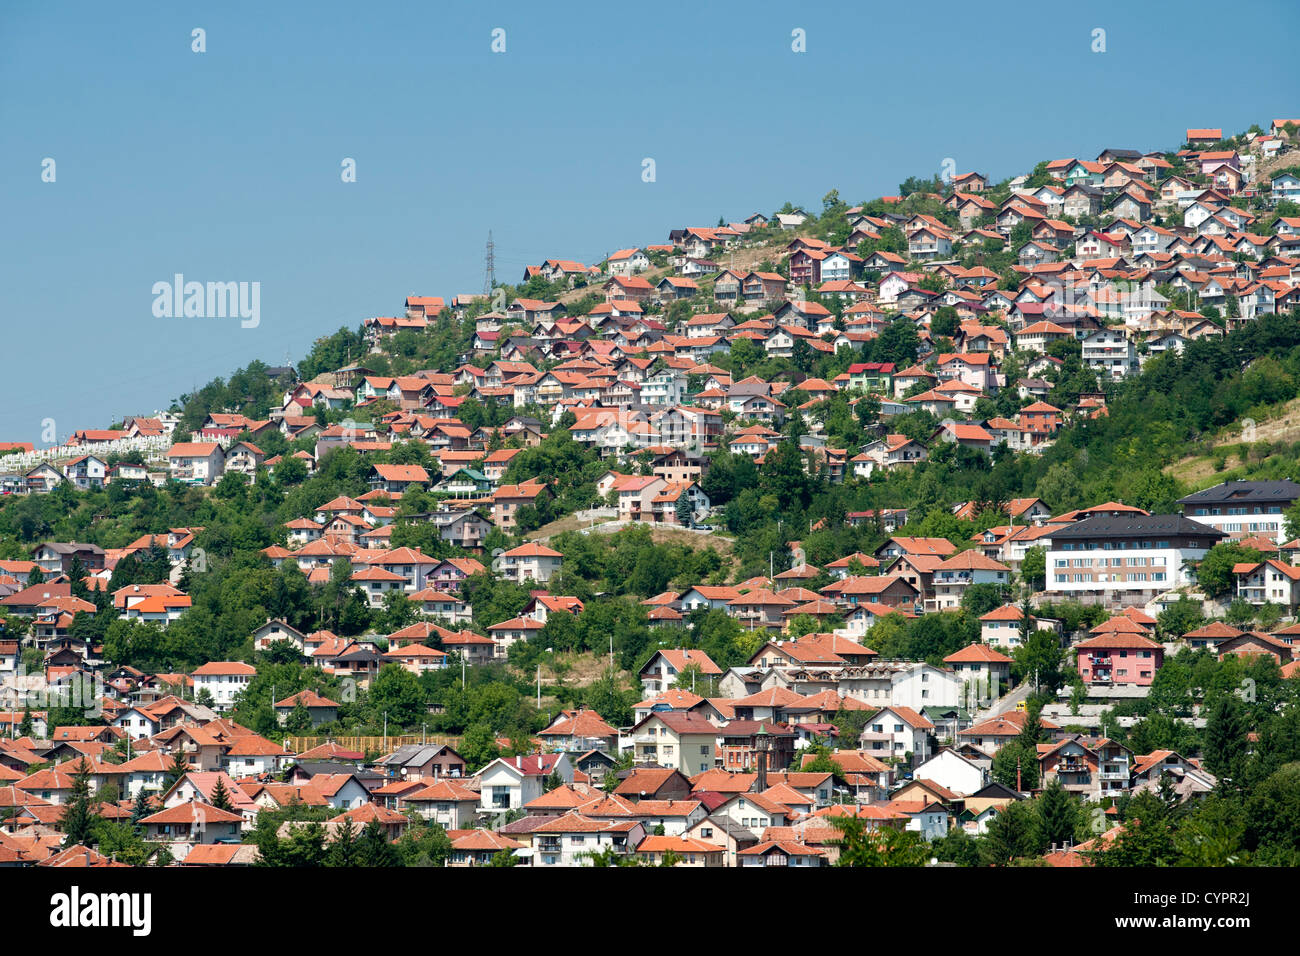 View of houses on the hills surrounding Sarajevo, the capital city of Bosnia and Herzegovina. Stock Photo